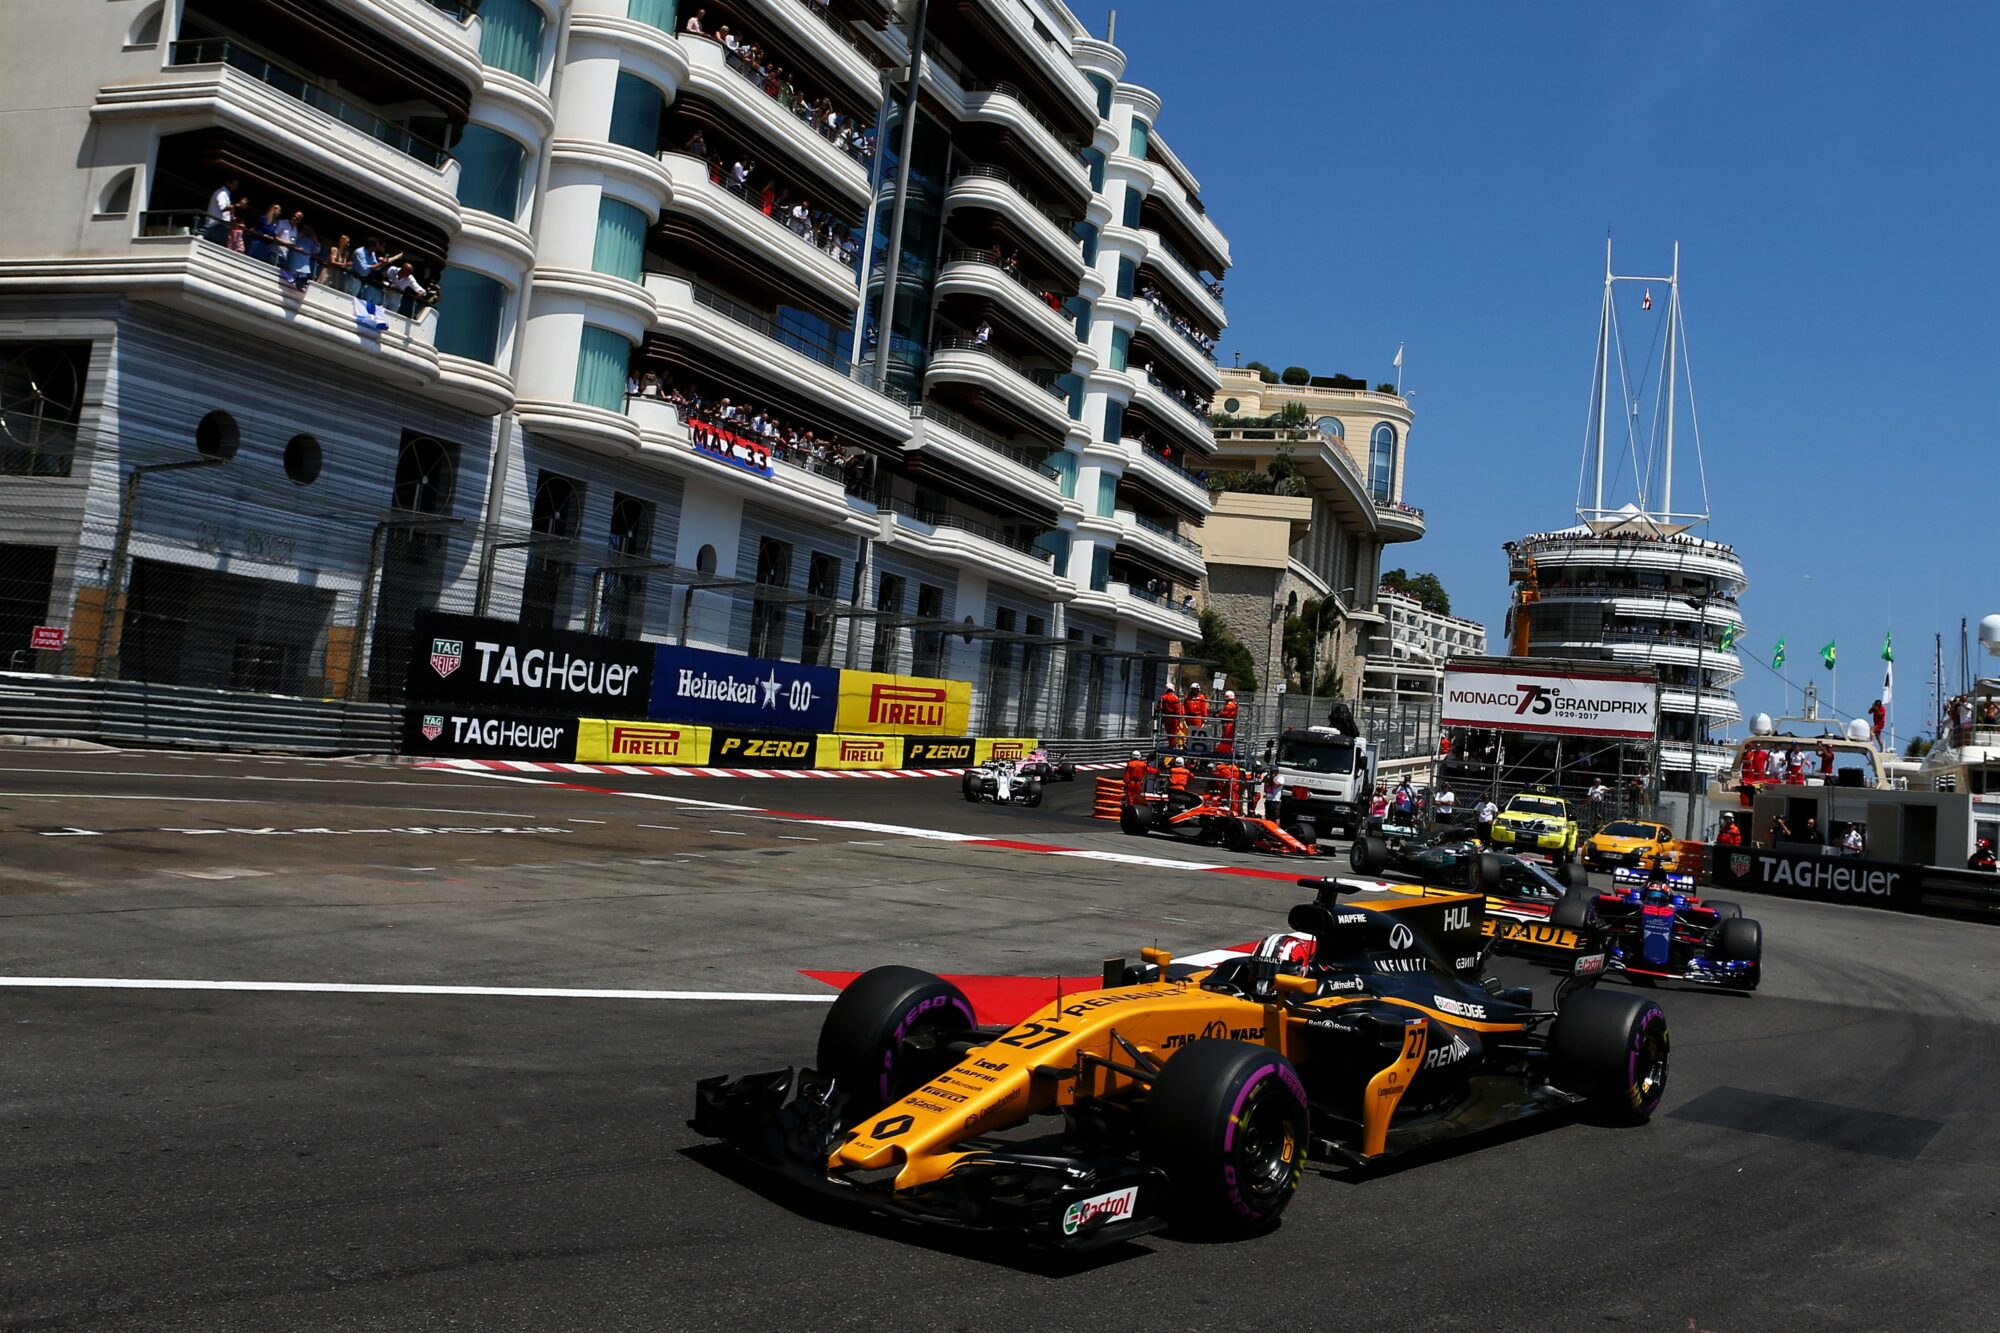 2017 - Grand Prix de Formule 1 de Monaco